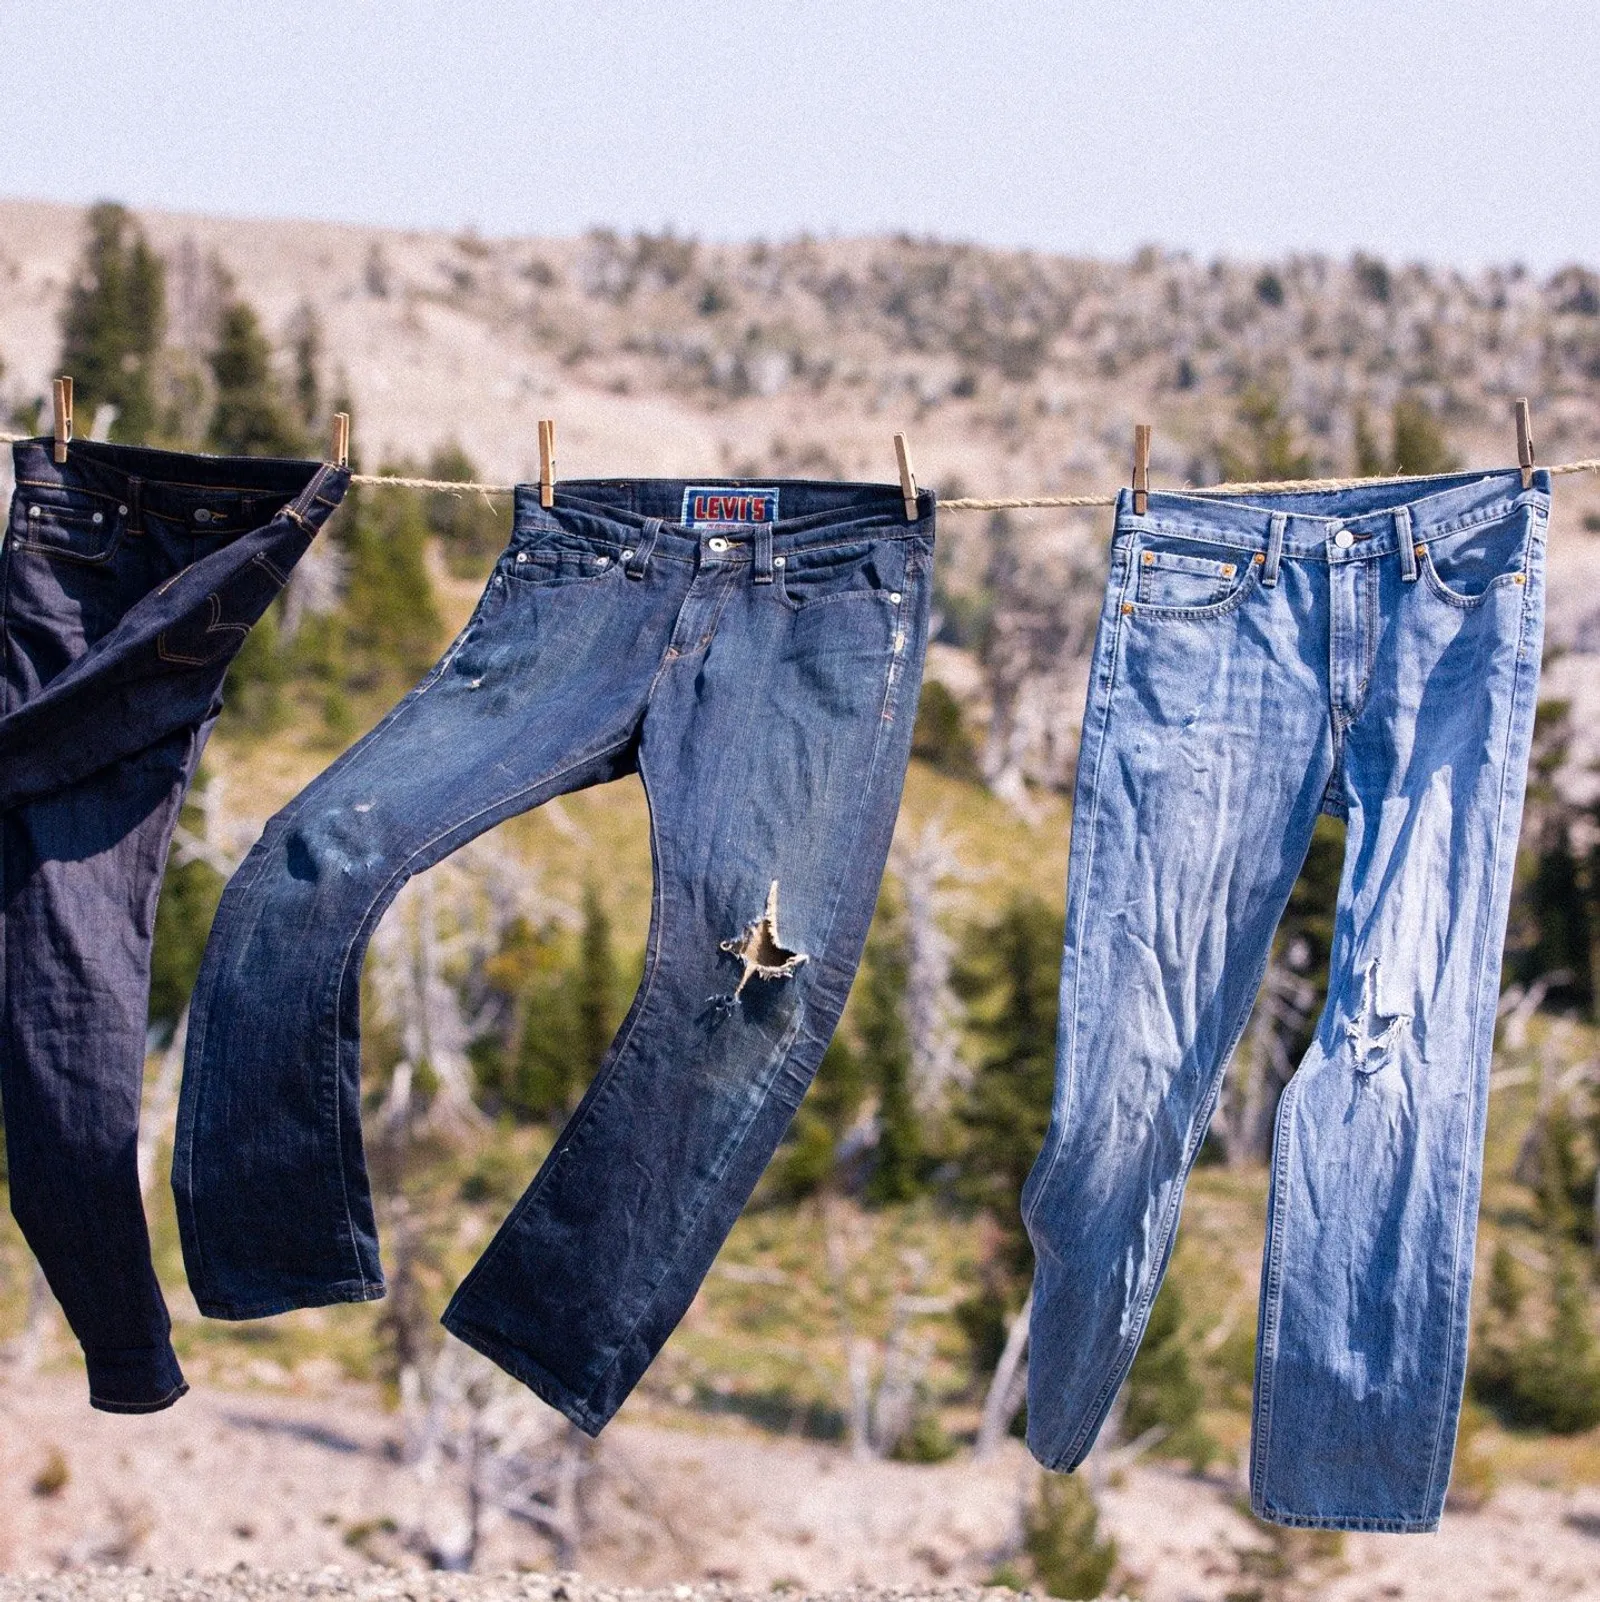 Agar Tetap Awet, Begini Cara Merawat Celana Jeans yang Harus Kamu Tahu